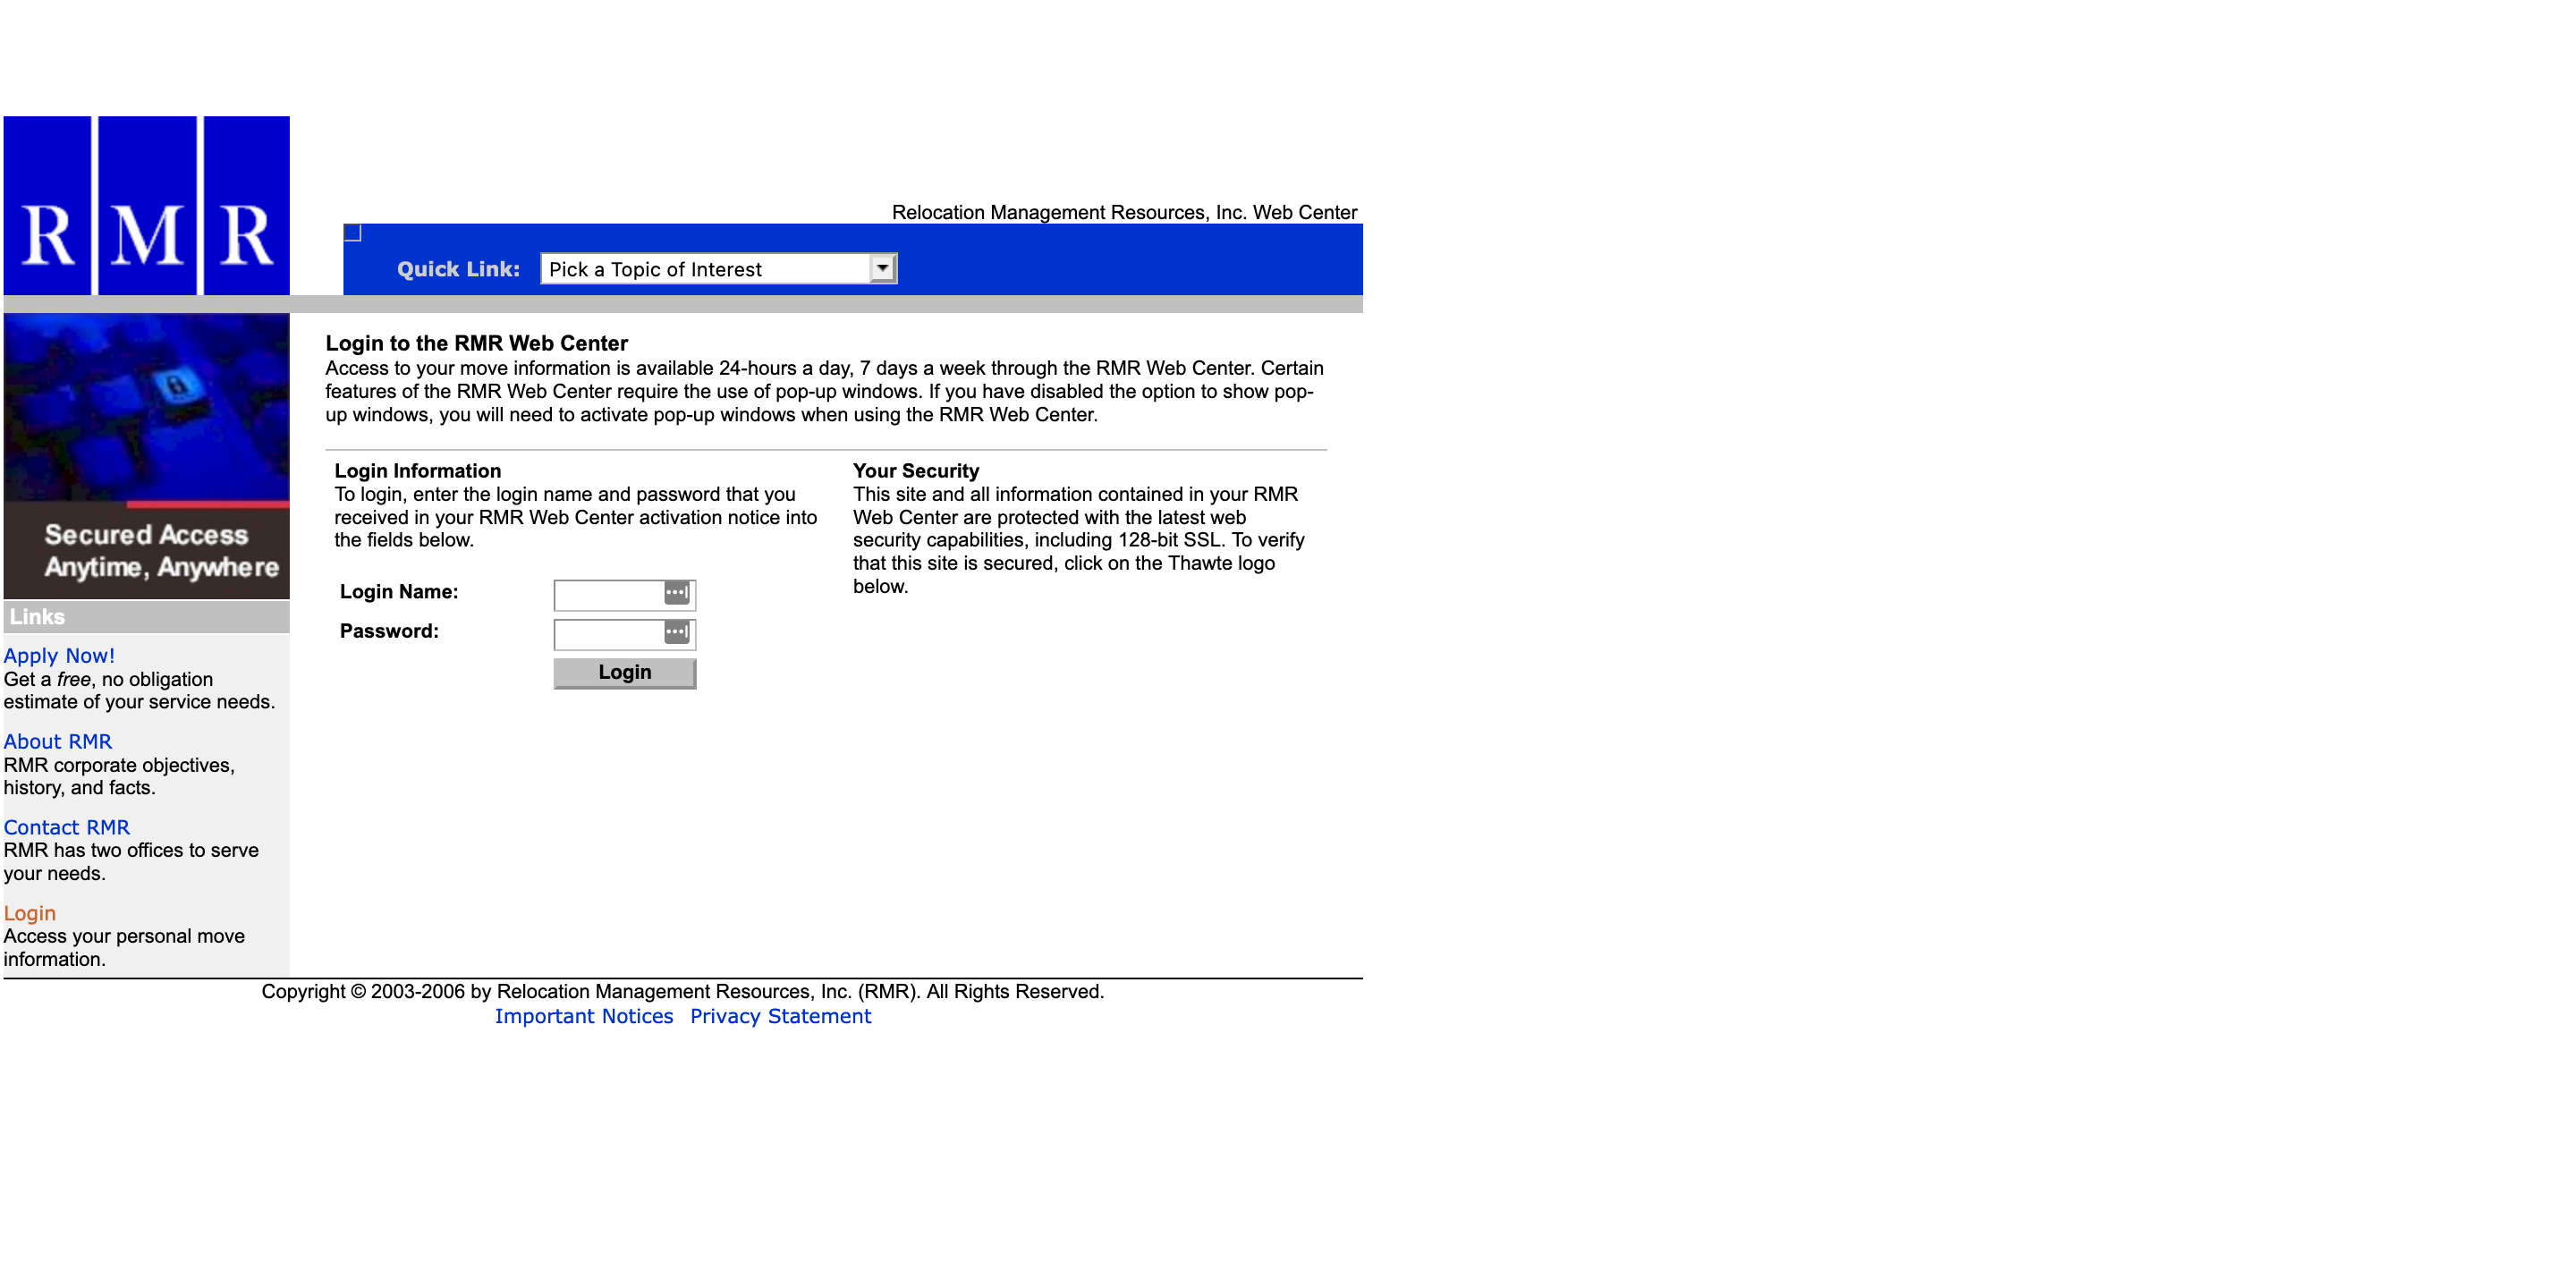 RMR's old client portal login screen